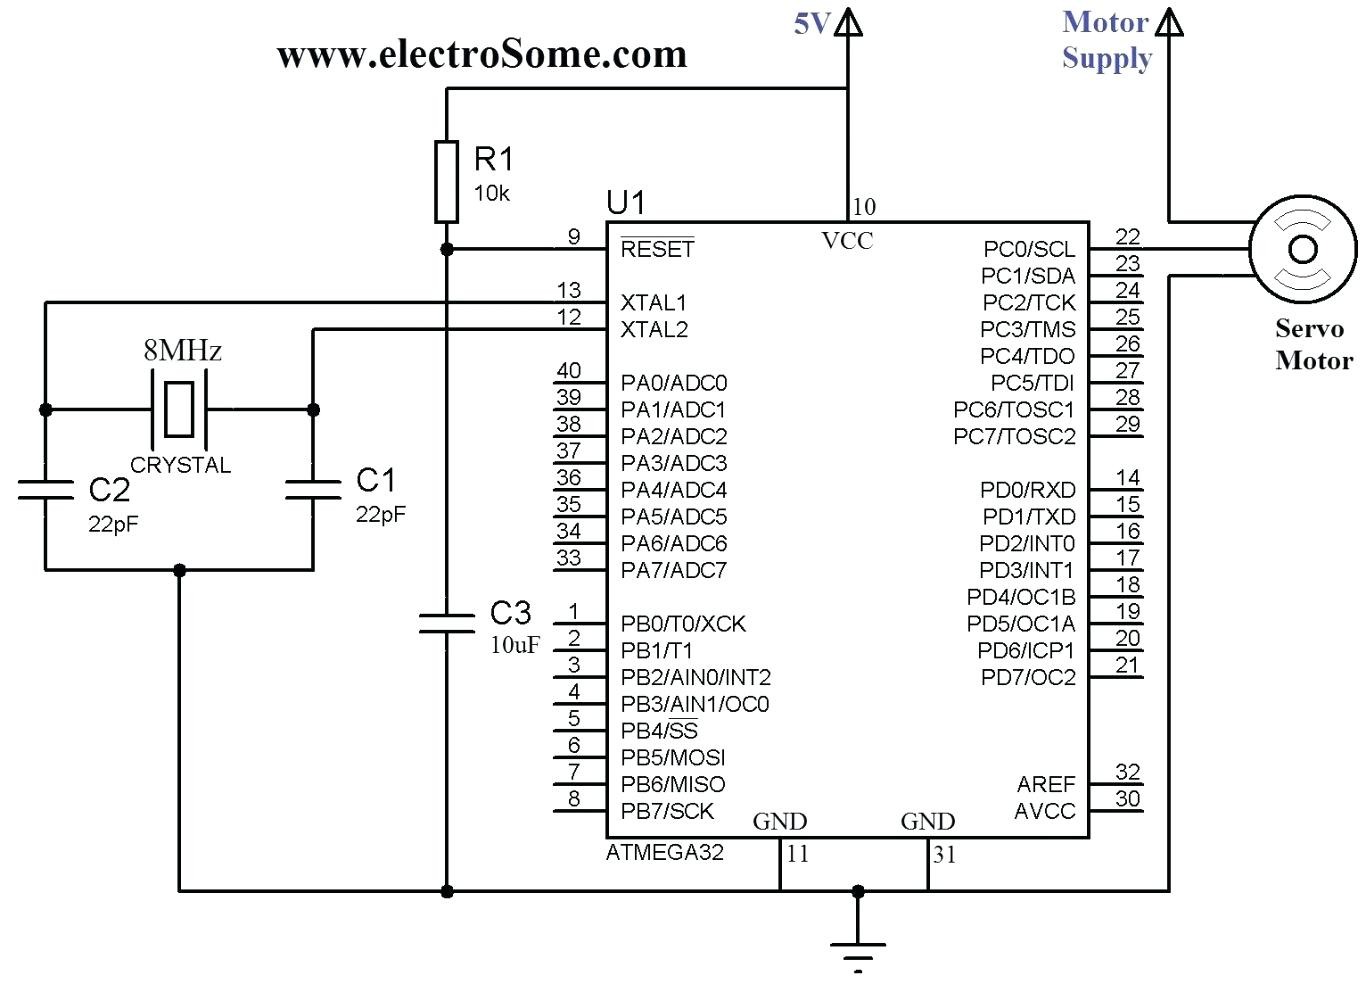 Electric Furnace Fan Relay Wiring Diagram